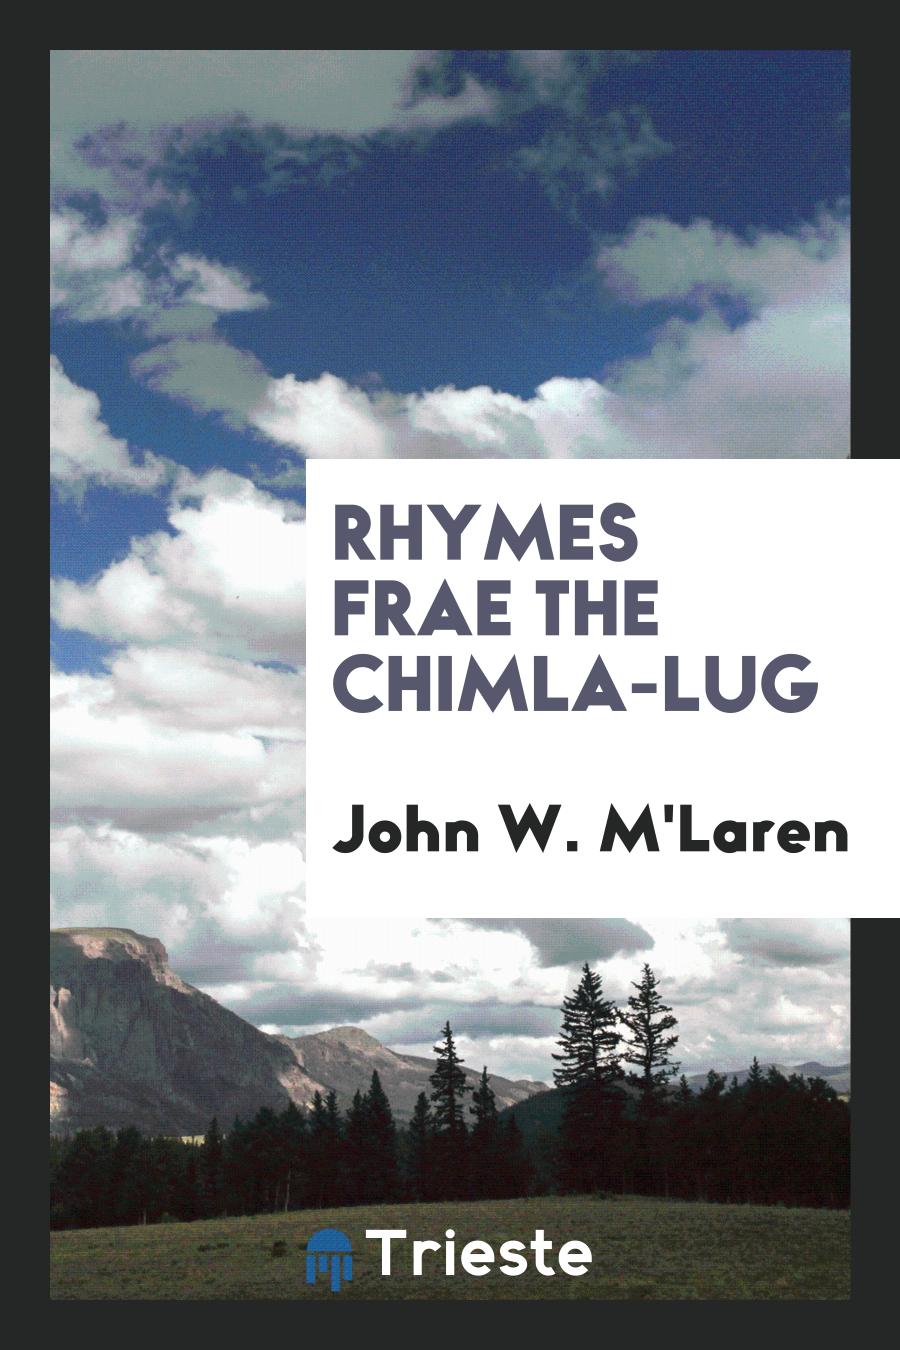 Rhymes Frae the Chimla-Lug